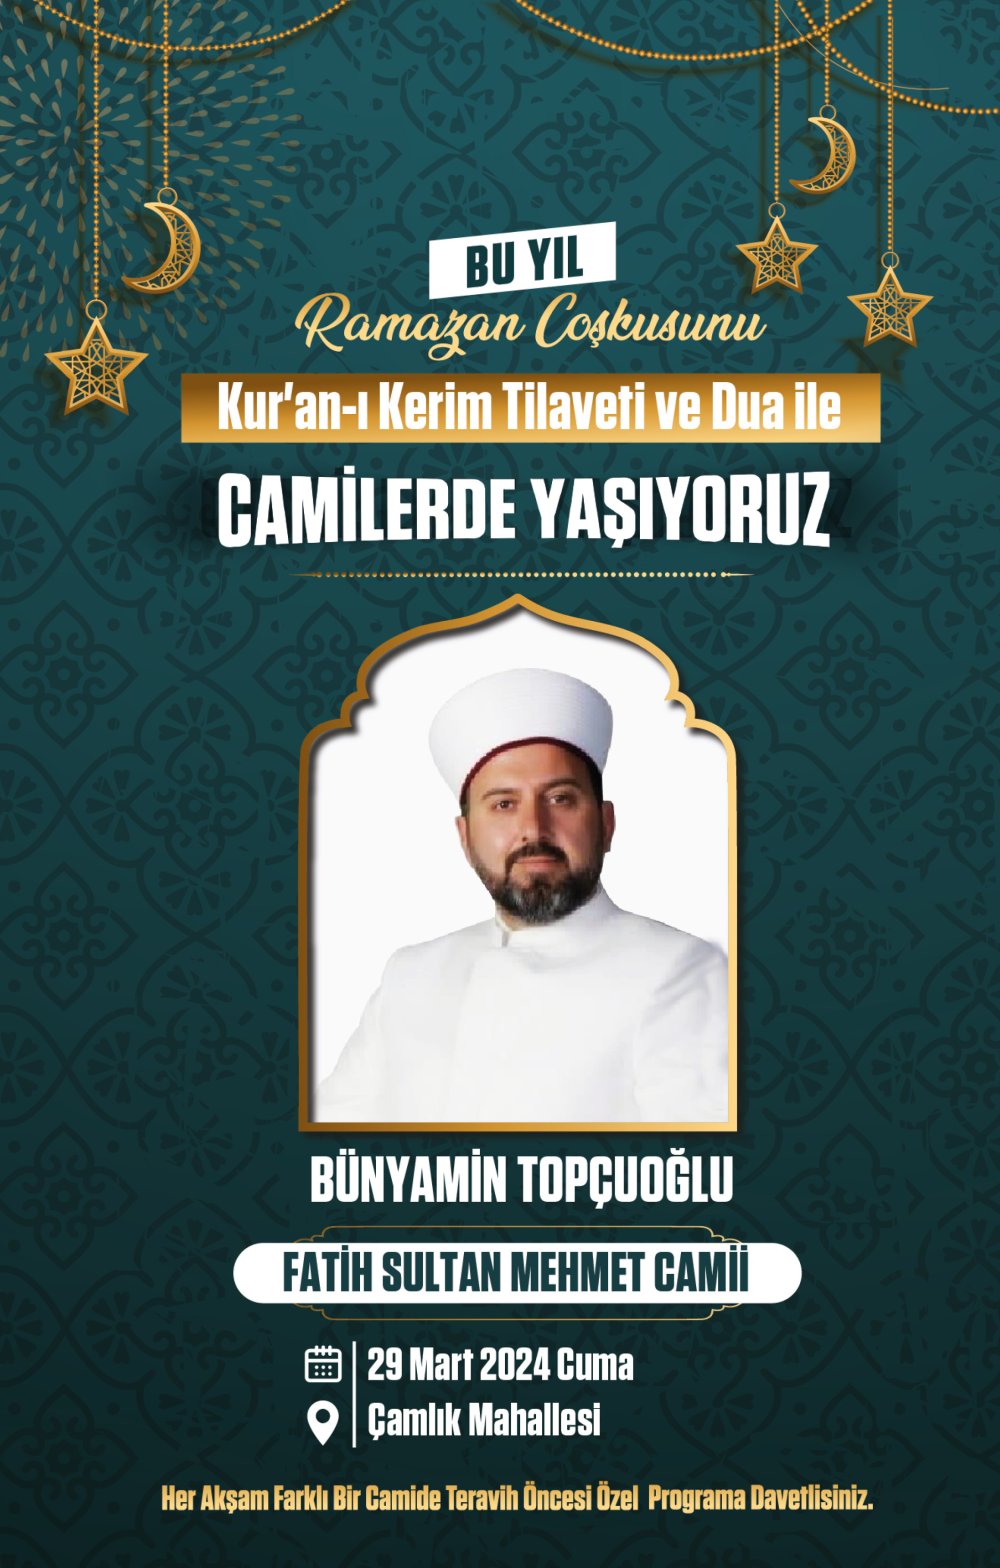 Fatih Sultan Mehmet Camii (Bünyamin Topçuoğlu)